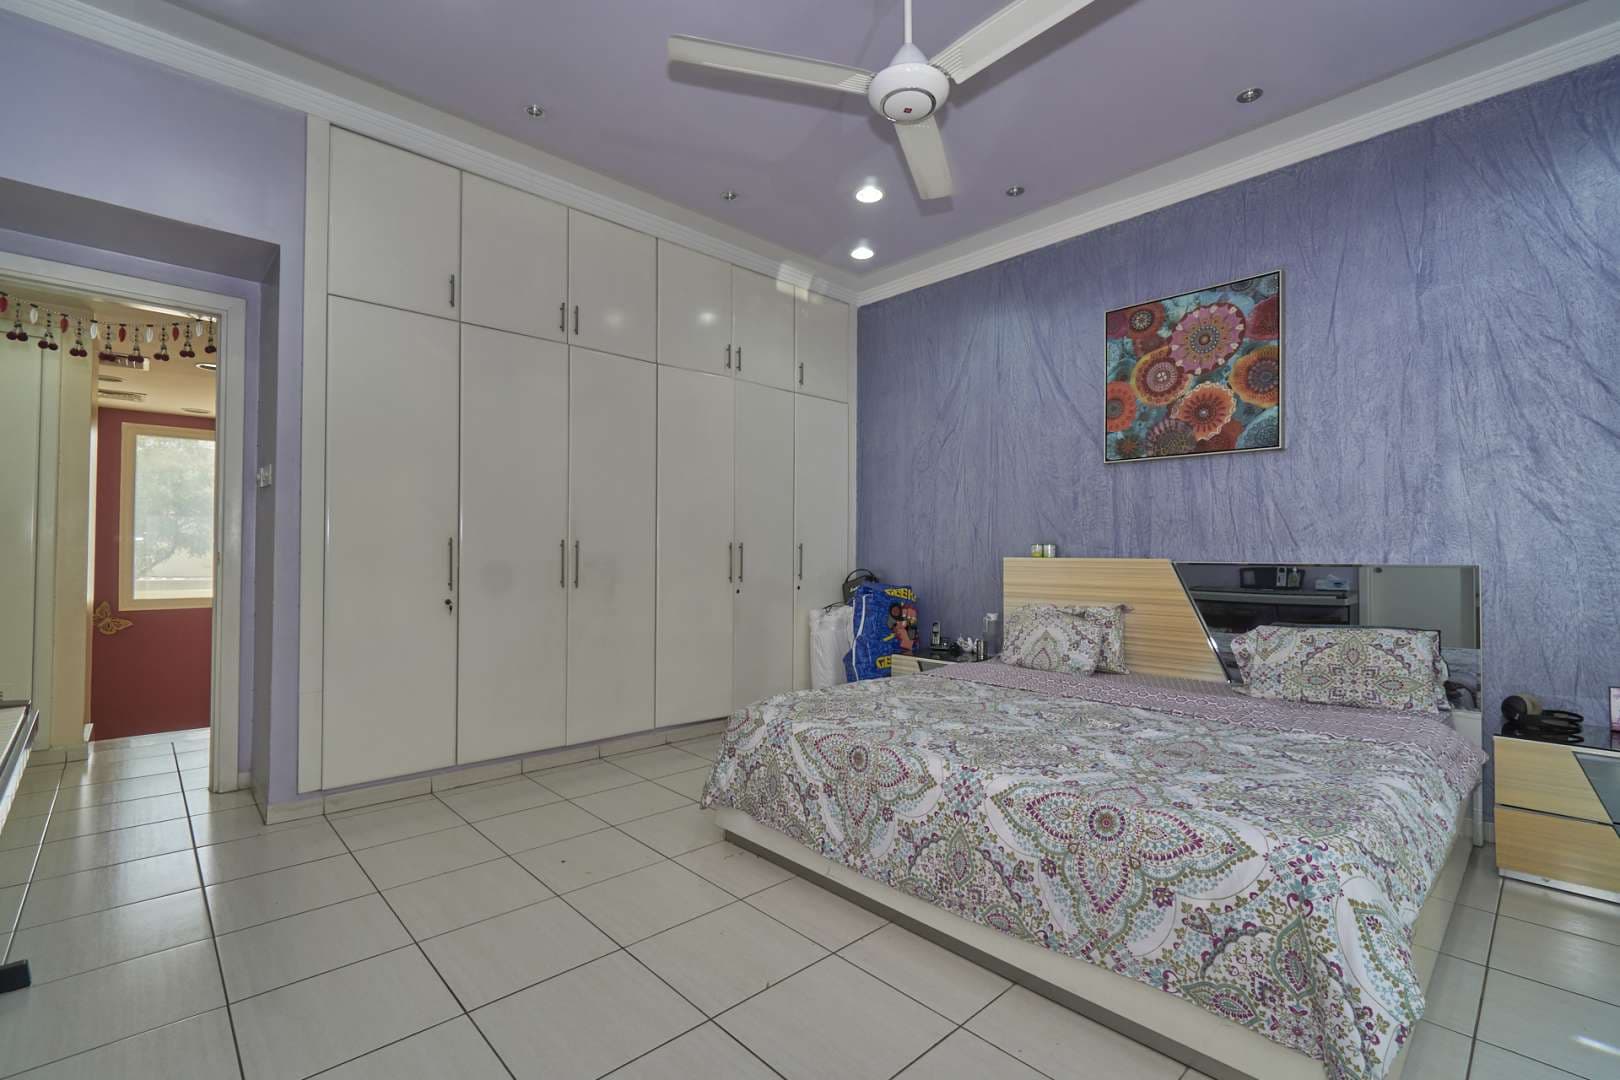 3 Bedroom Villa For Rent Springs 7 Lp07177 22a59f9df2633000.jpg